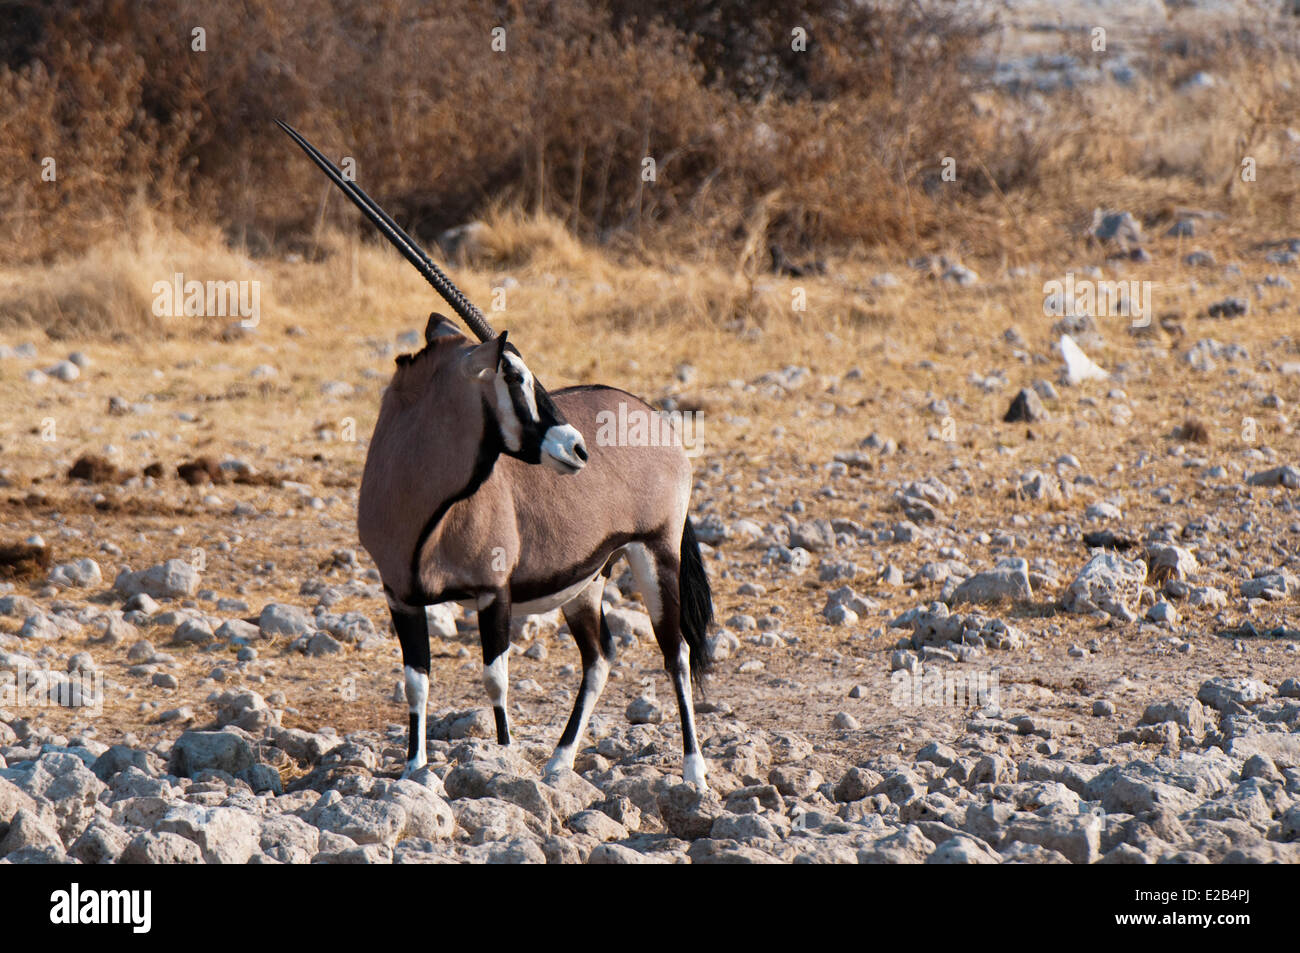 La Namibie, Etosha National Park, oryx gemsbok (Oryx gazella gazella) Banque D'Images